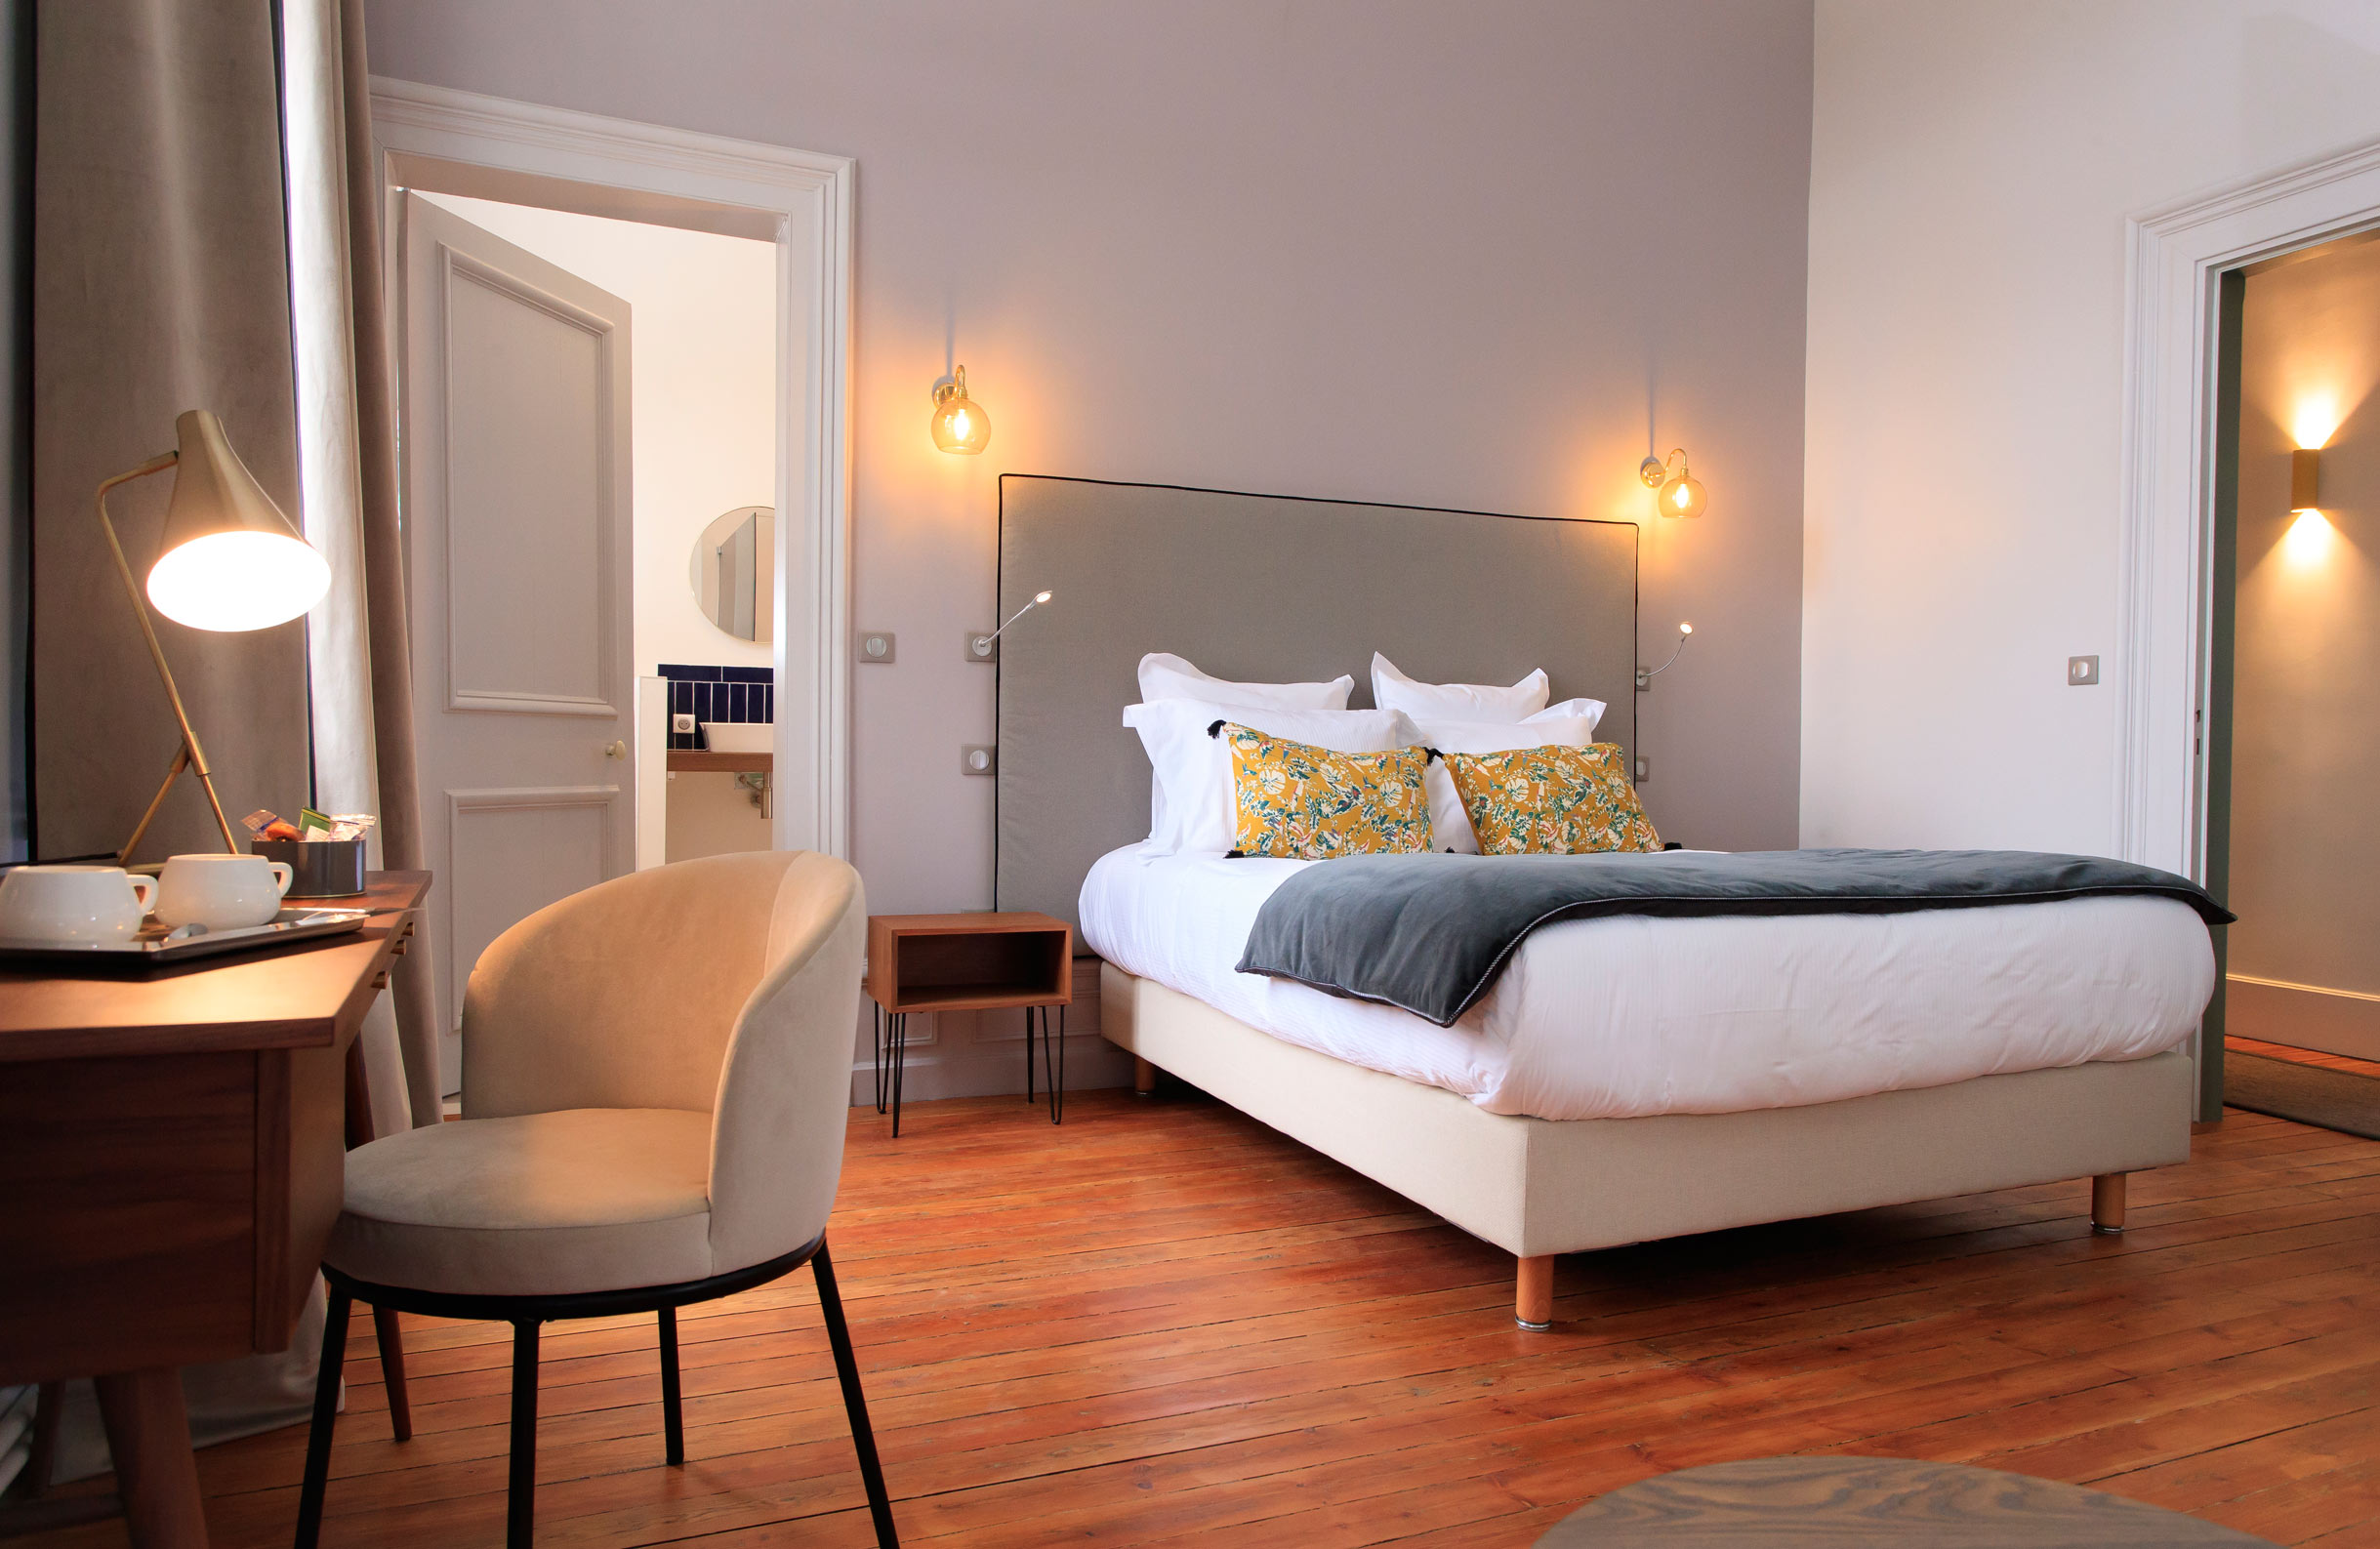 Soft tones and beautiful lighting in Villa Varentia's 'Louise Bonne' room - perfect for romantic weekend breaks